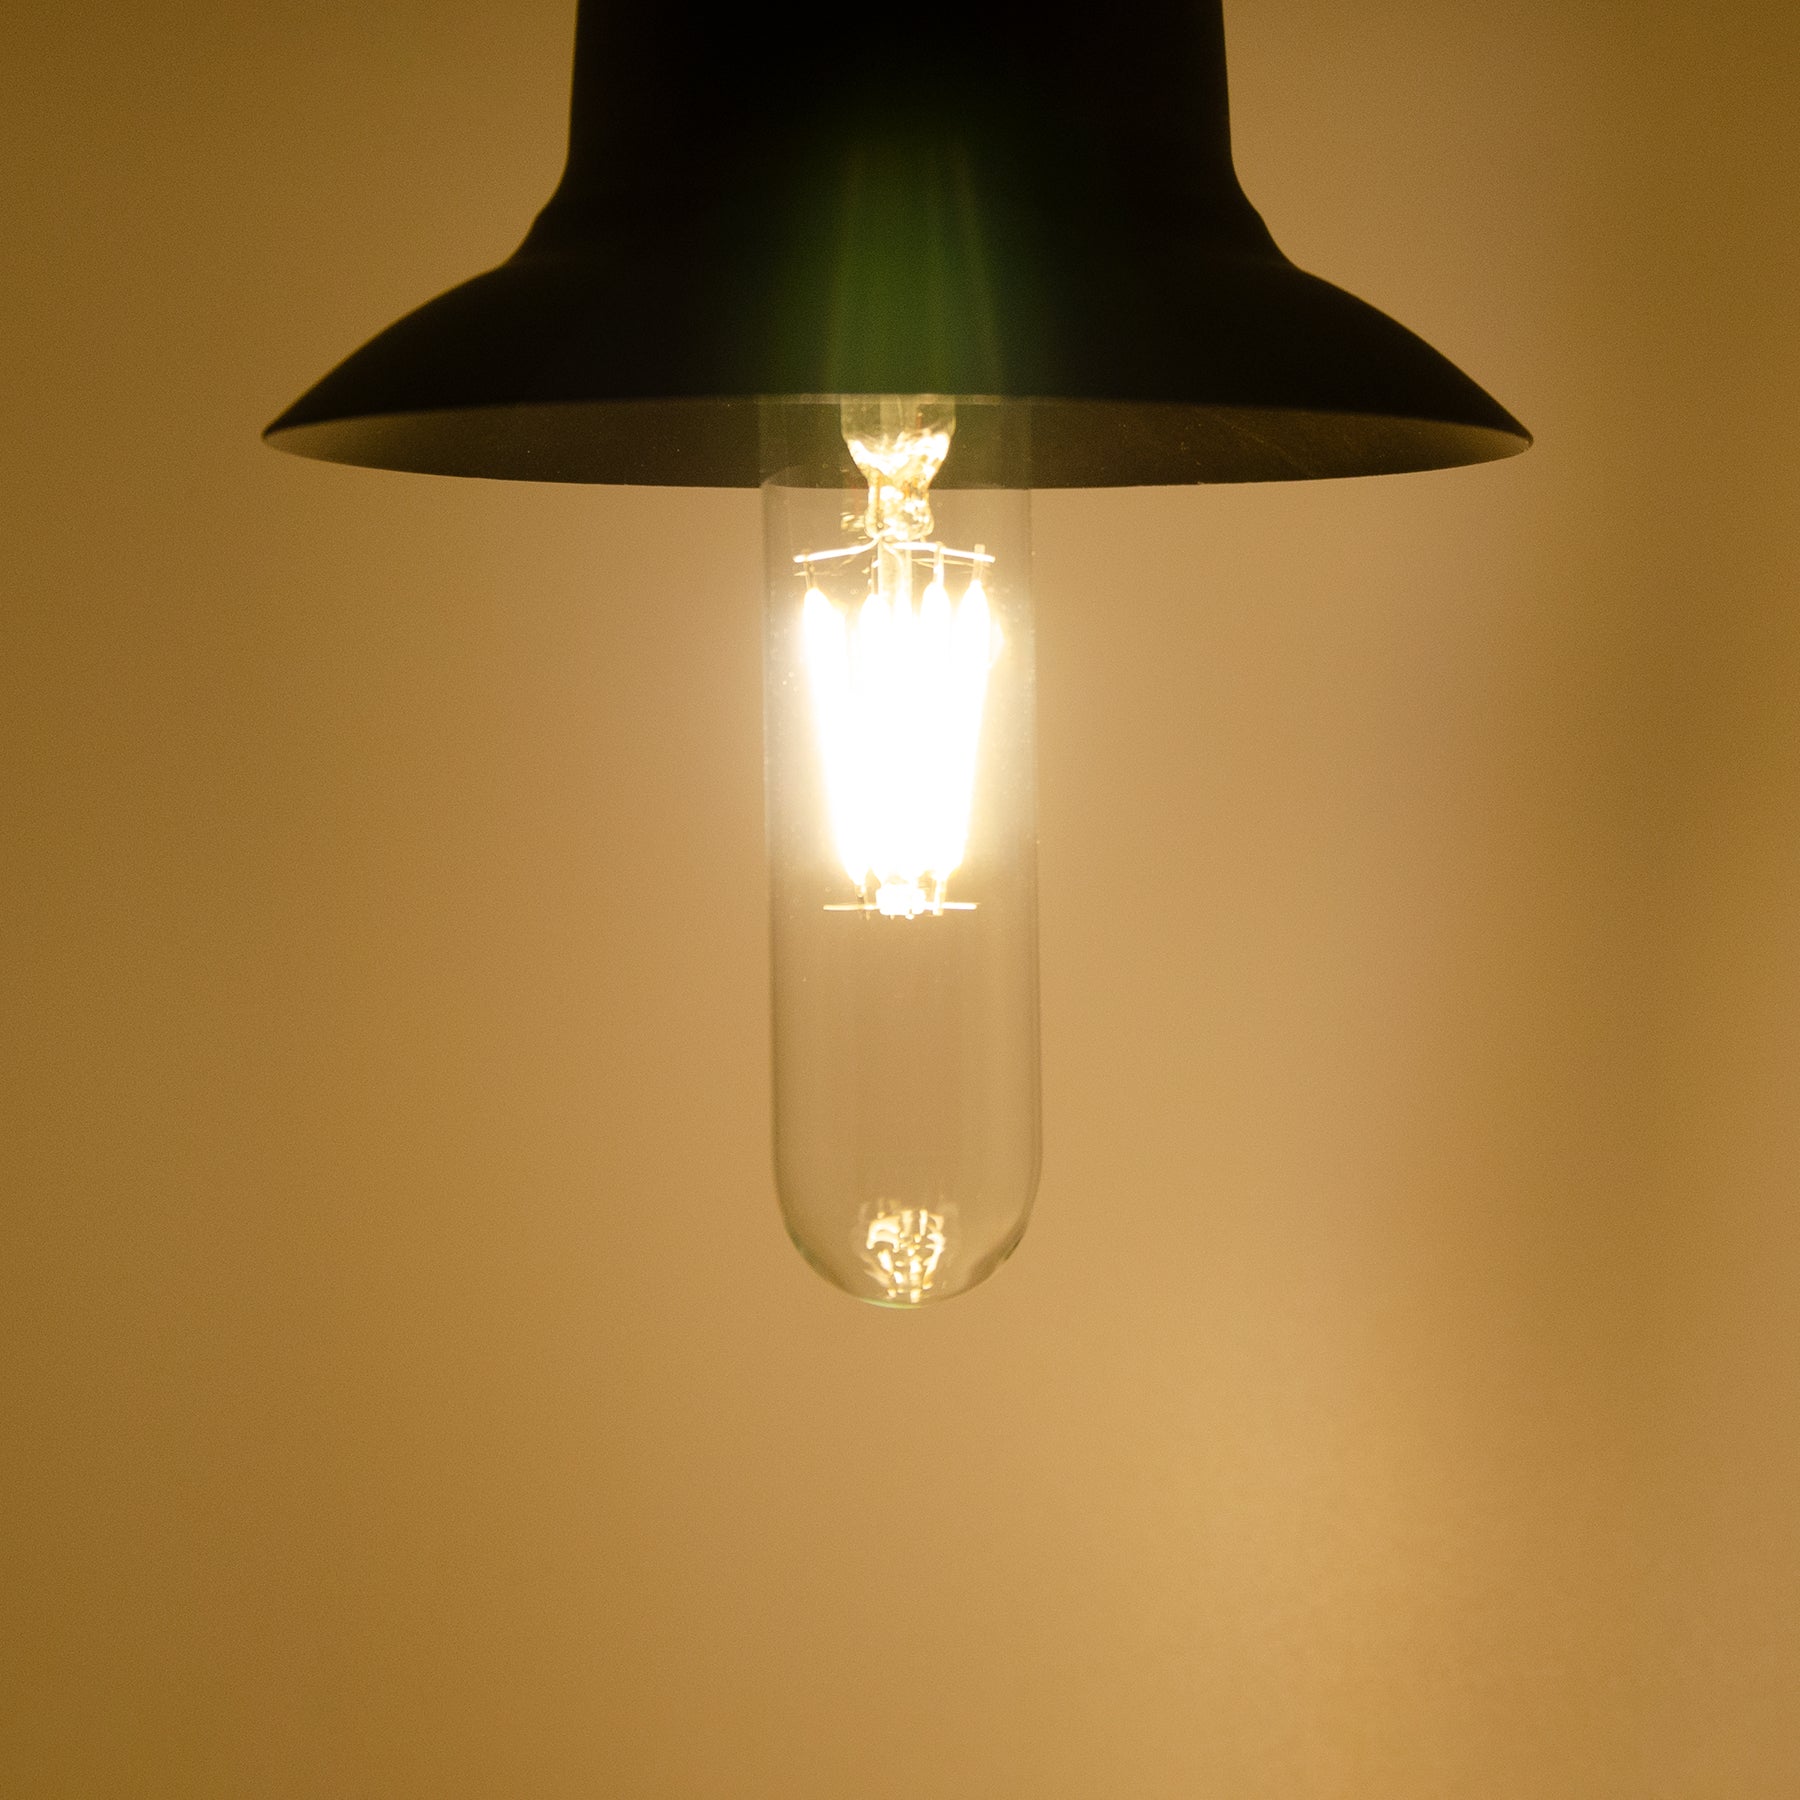 G.W.S LED Wholesale Filament LED Bulbs T30-125 Vintage Style Dimmable E27 4W LED Filament Tubular Light Bulb